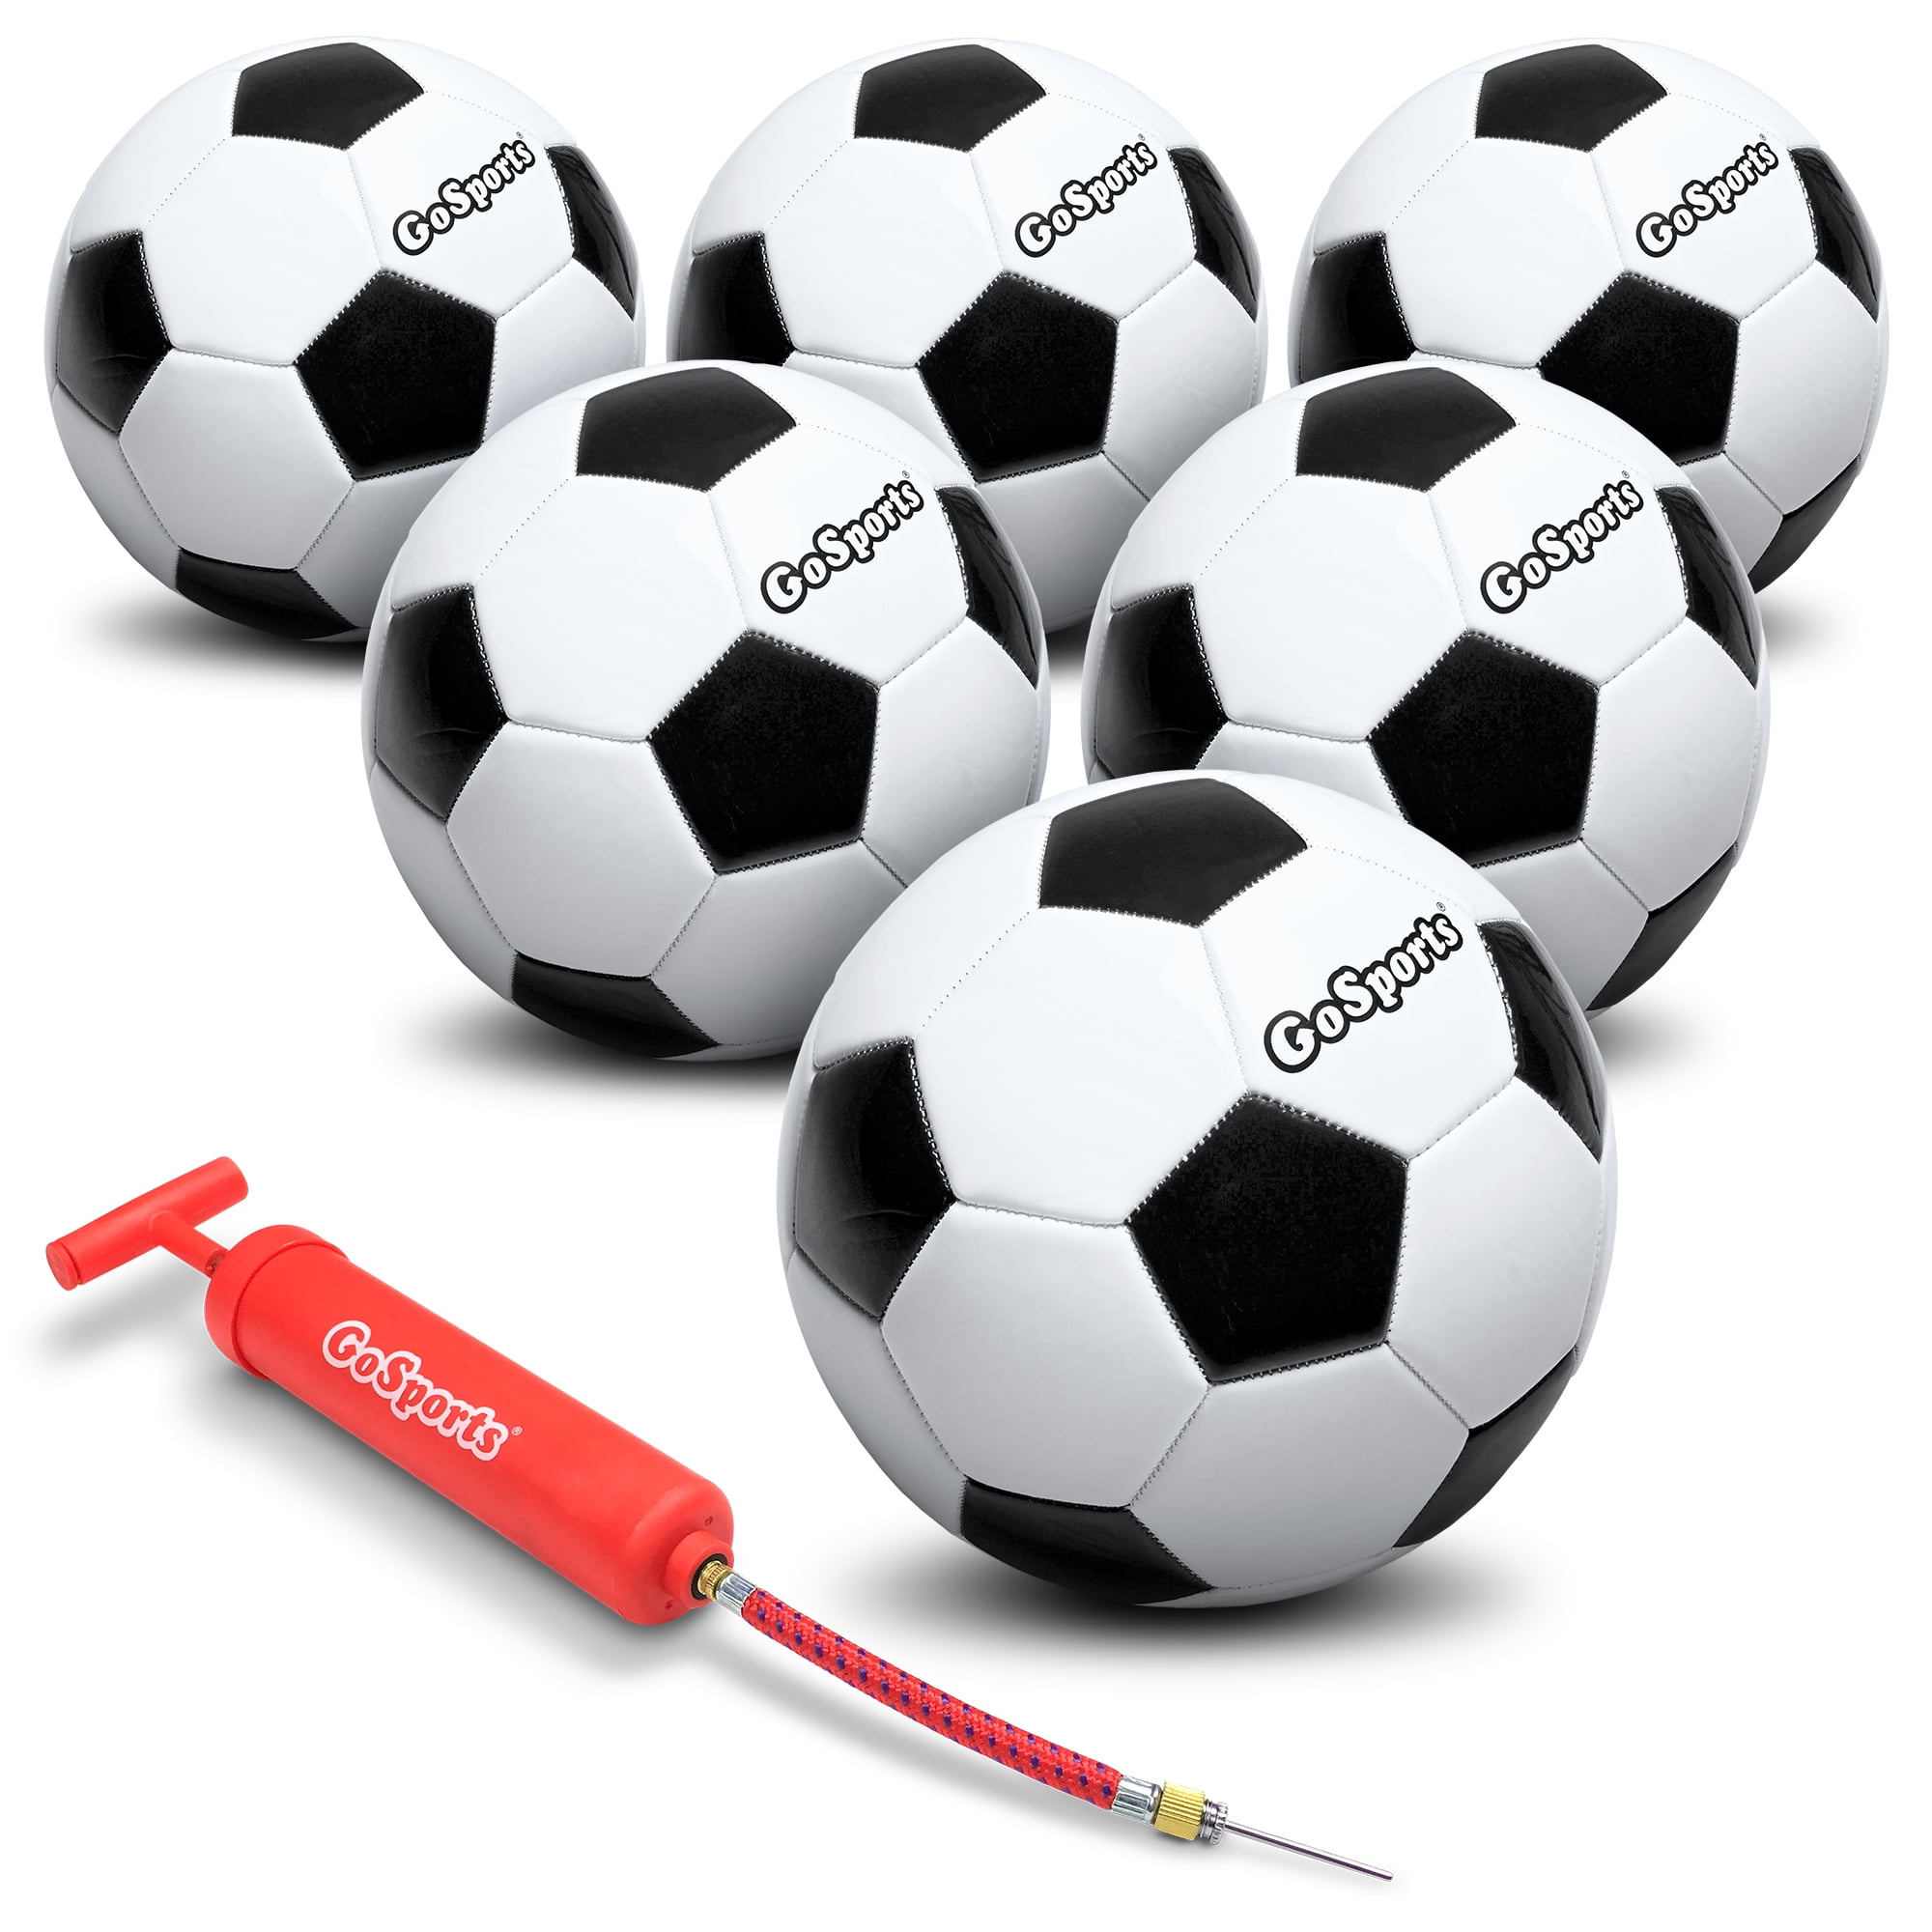 GoSports Light Up Bright LED Football & Soccer Ball Combo Pack 